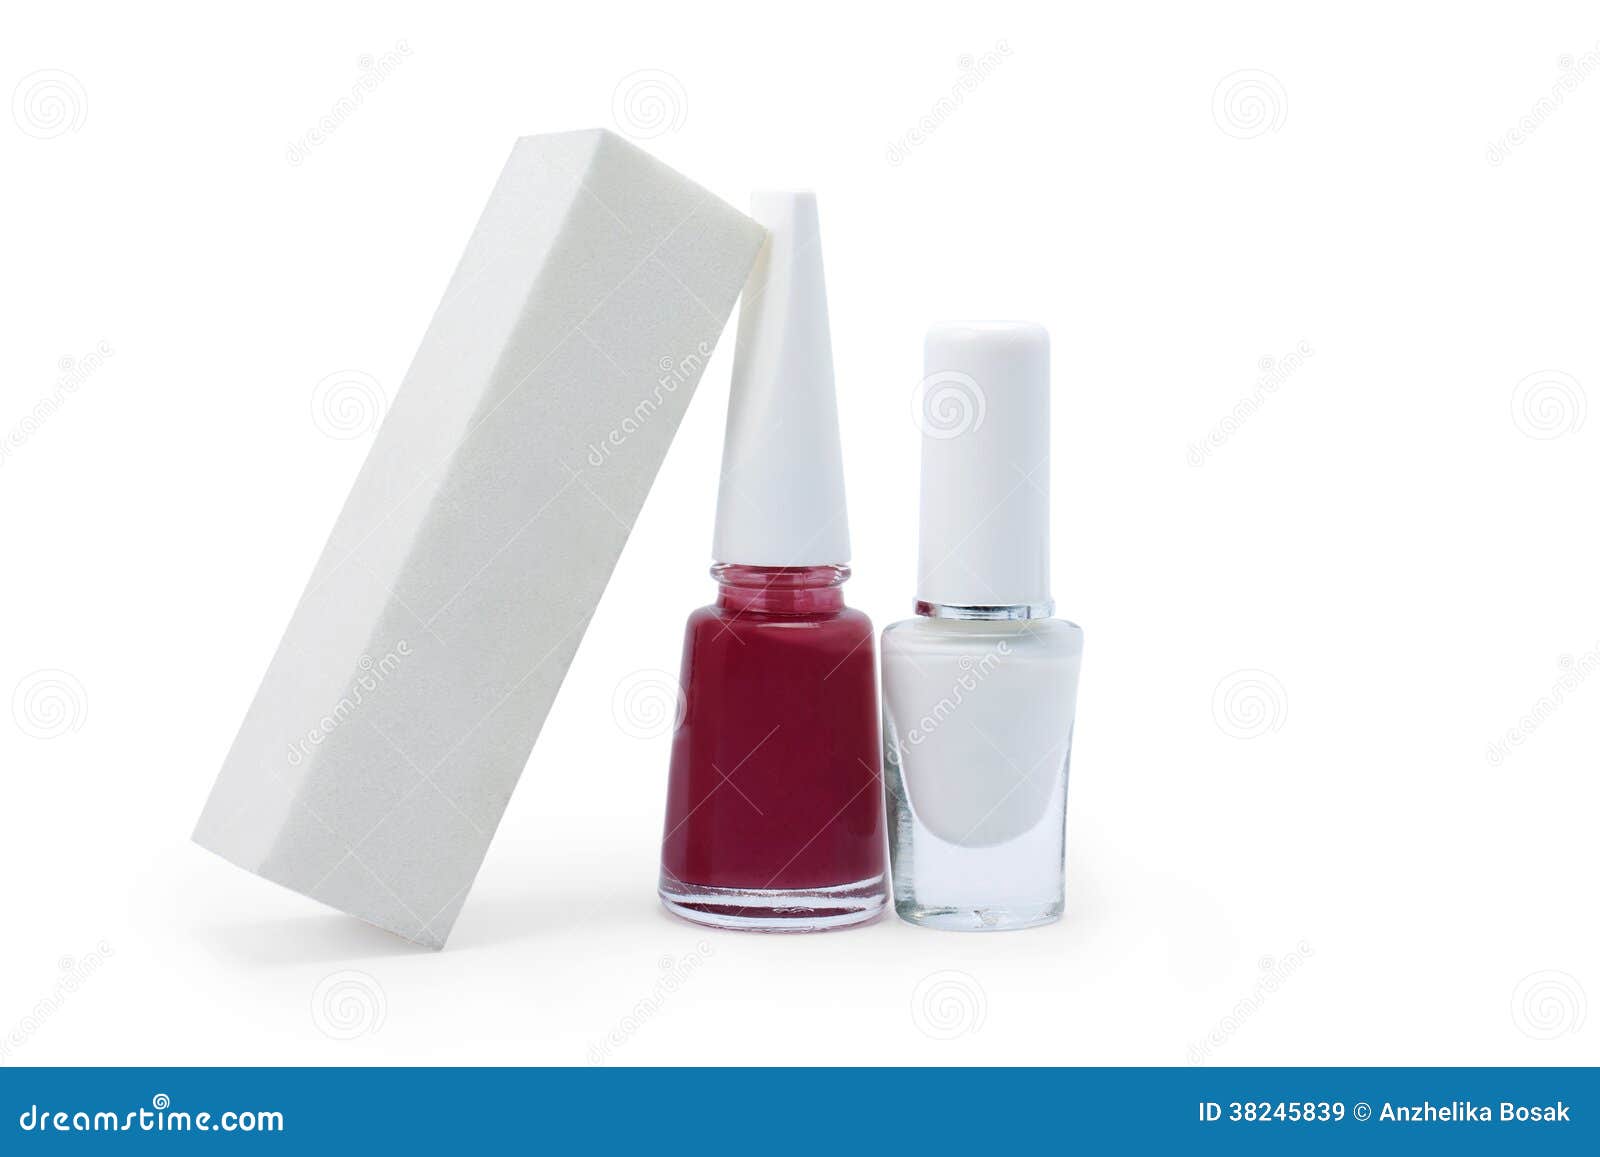 Sanding Block for Nail and Nails Polish Stock Image - Image of file, life:  38245839